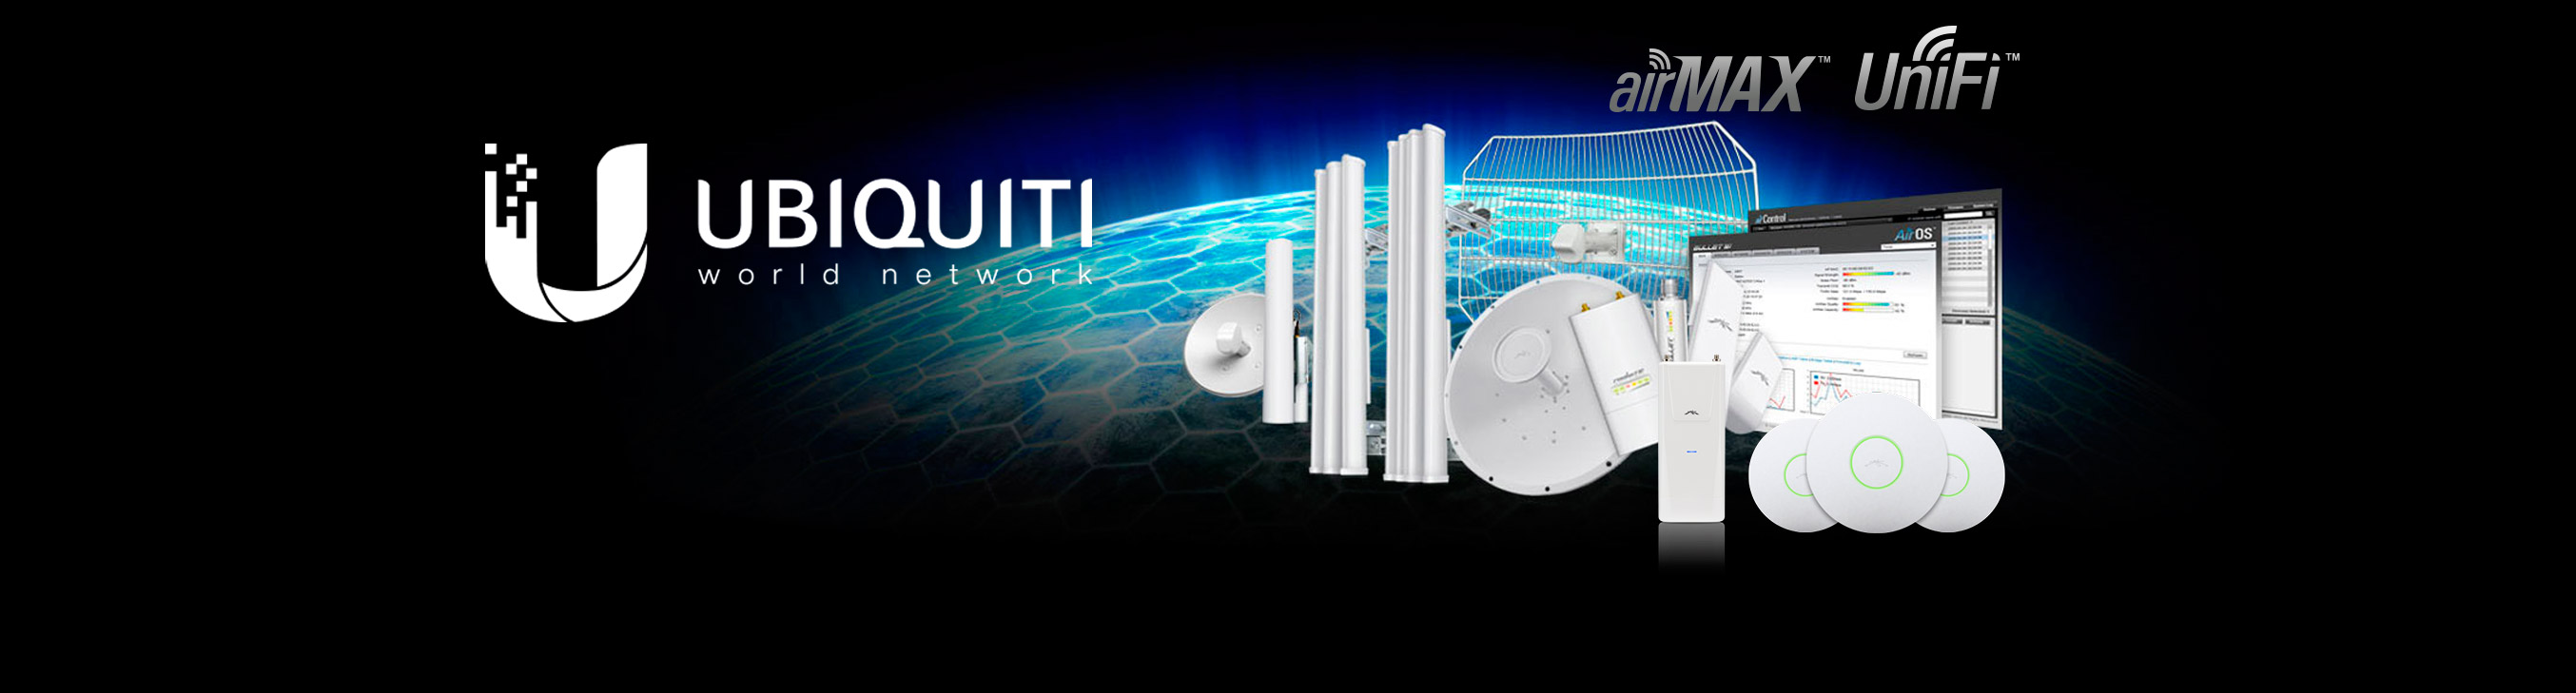 Ubiquiti Networks, Distribuidor de electronica y telecomunicaciones